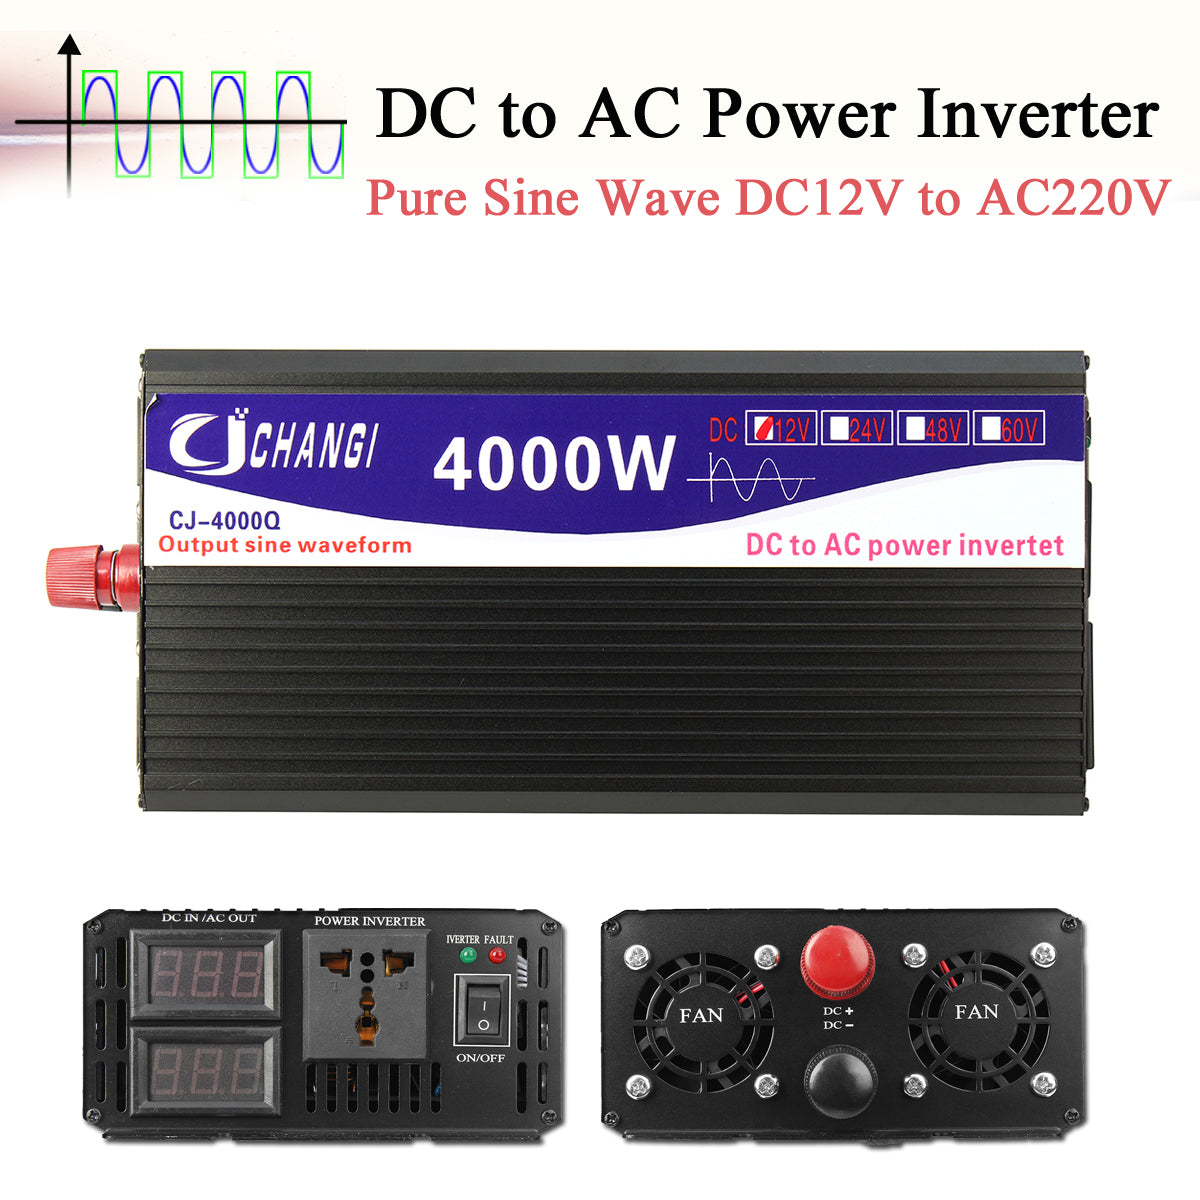 4000W Power Inverter DC12V/24V/48V to AC 110V Modified Sine Wave inverter